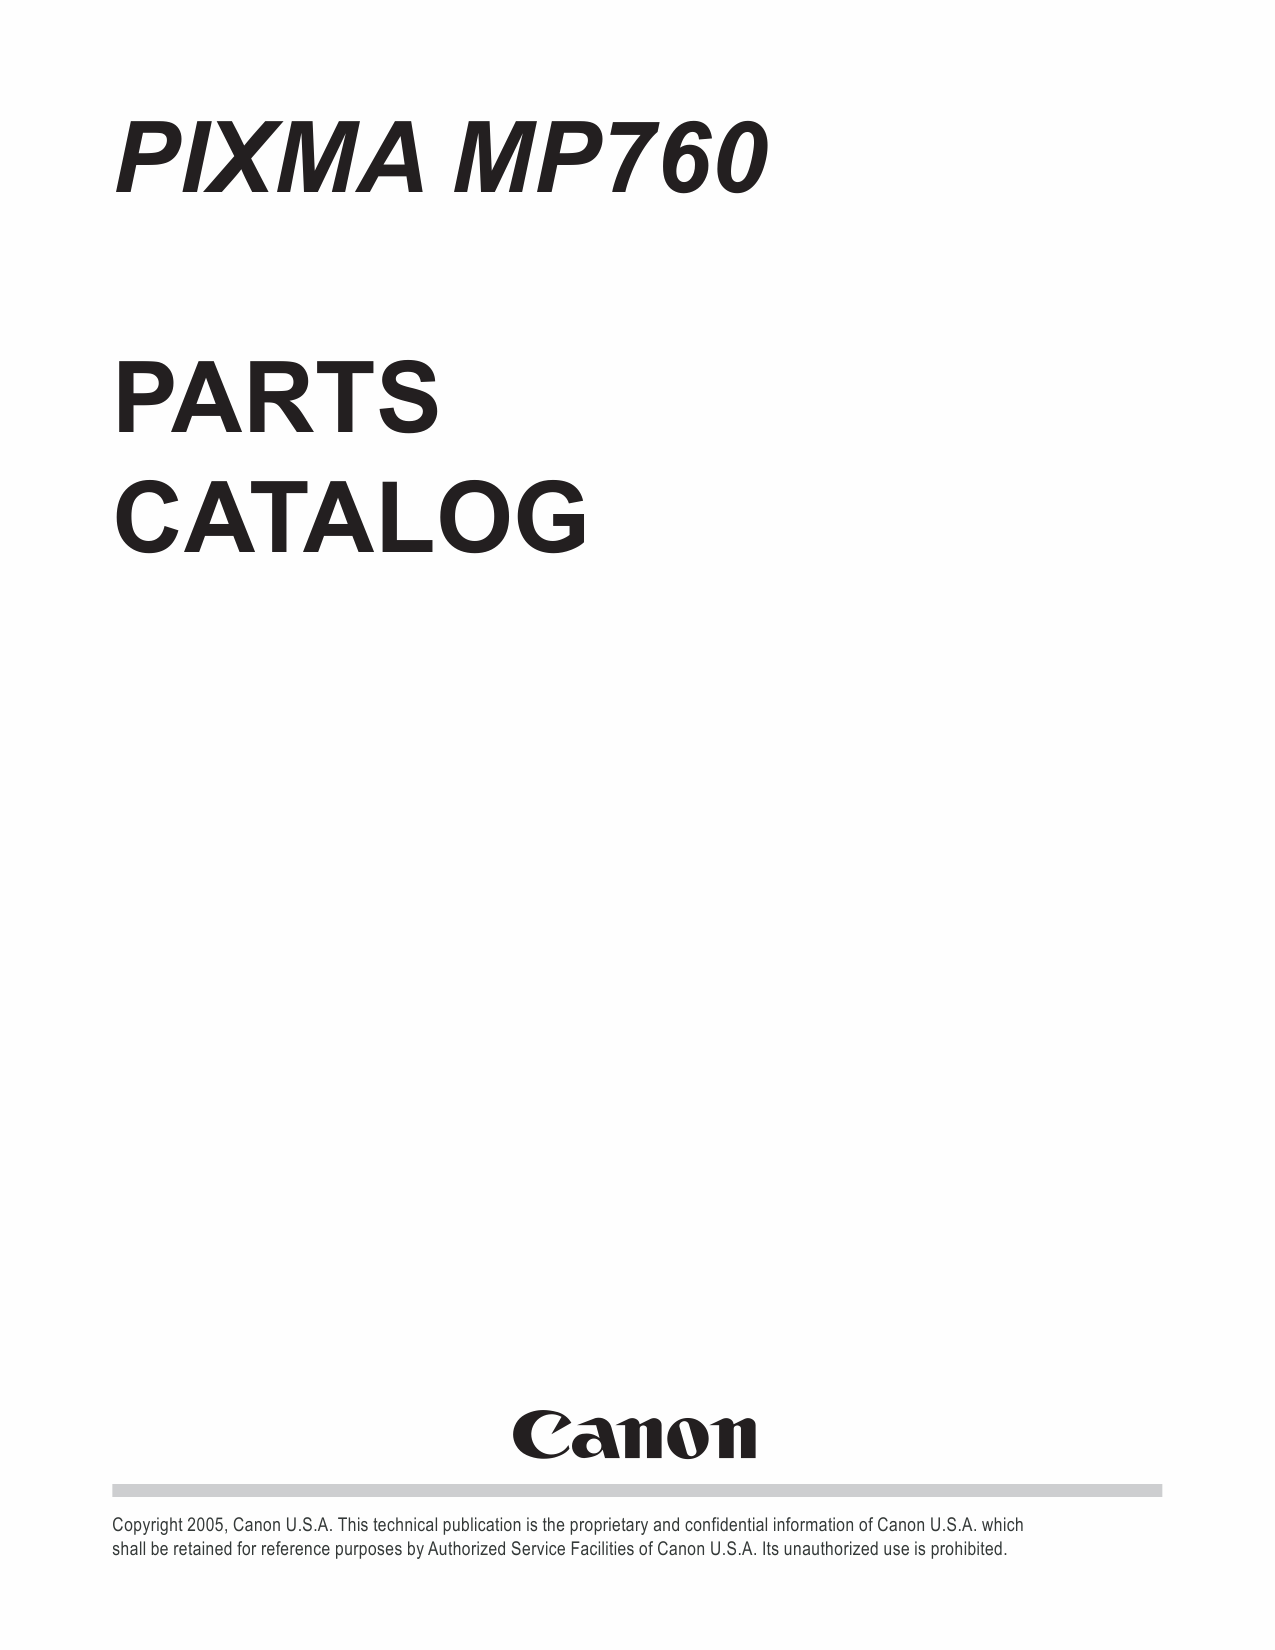 Canon PIXMA MP760 Parts Catalog Manual-1